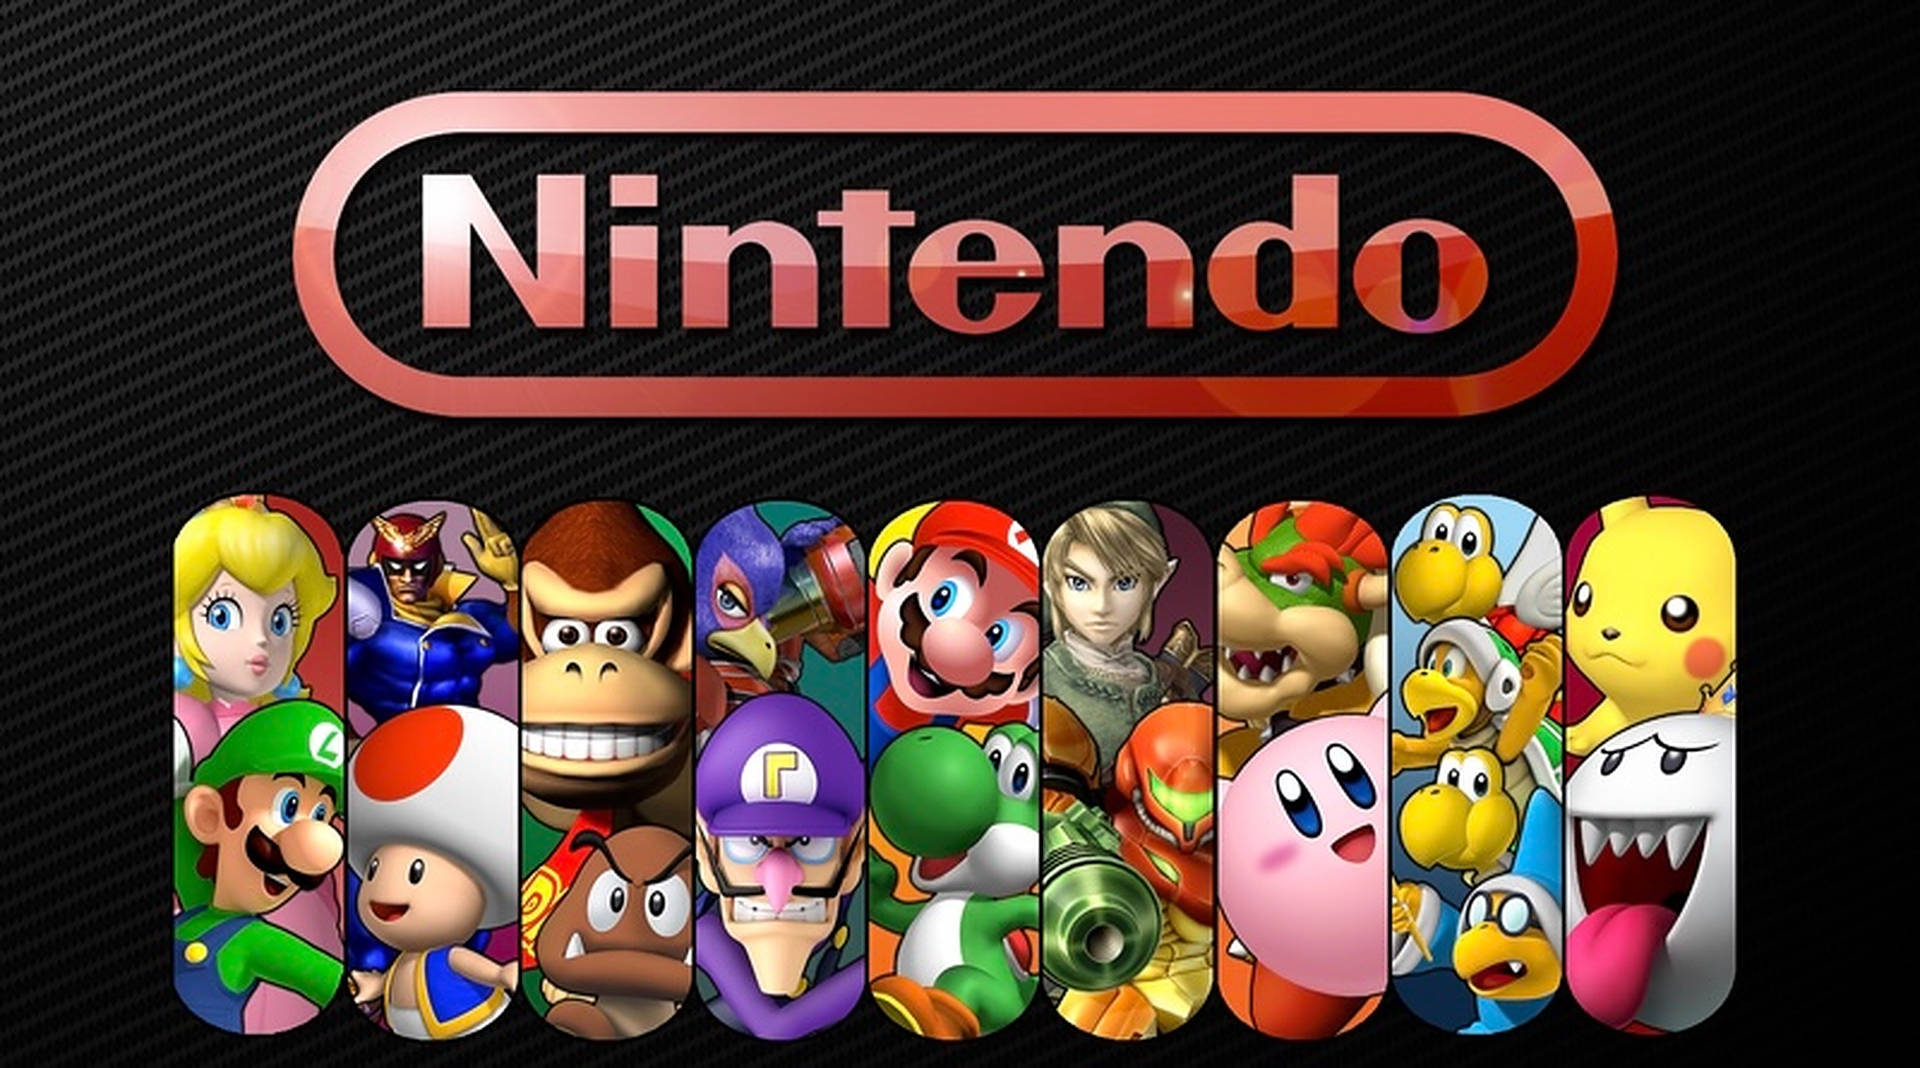 Nintendo Characters Logo Background